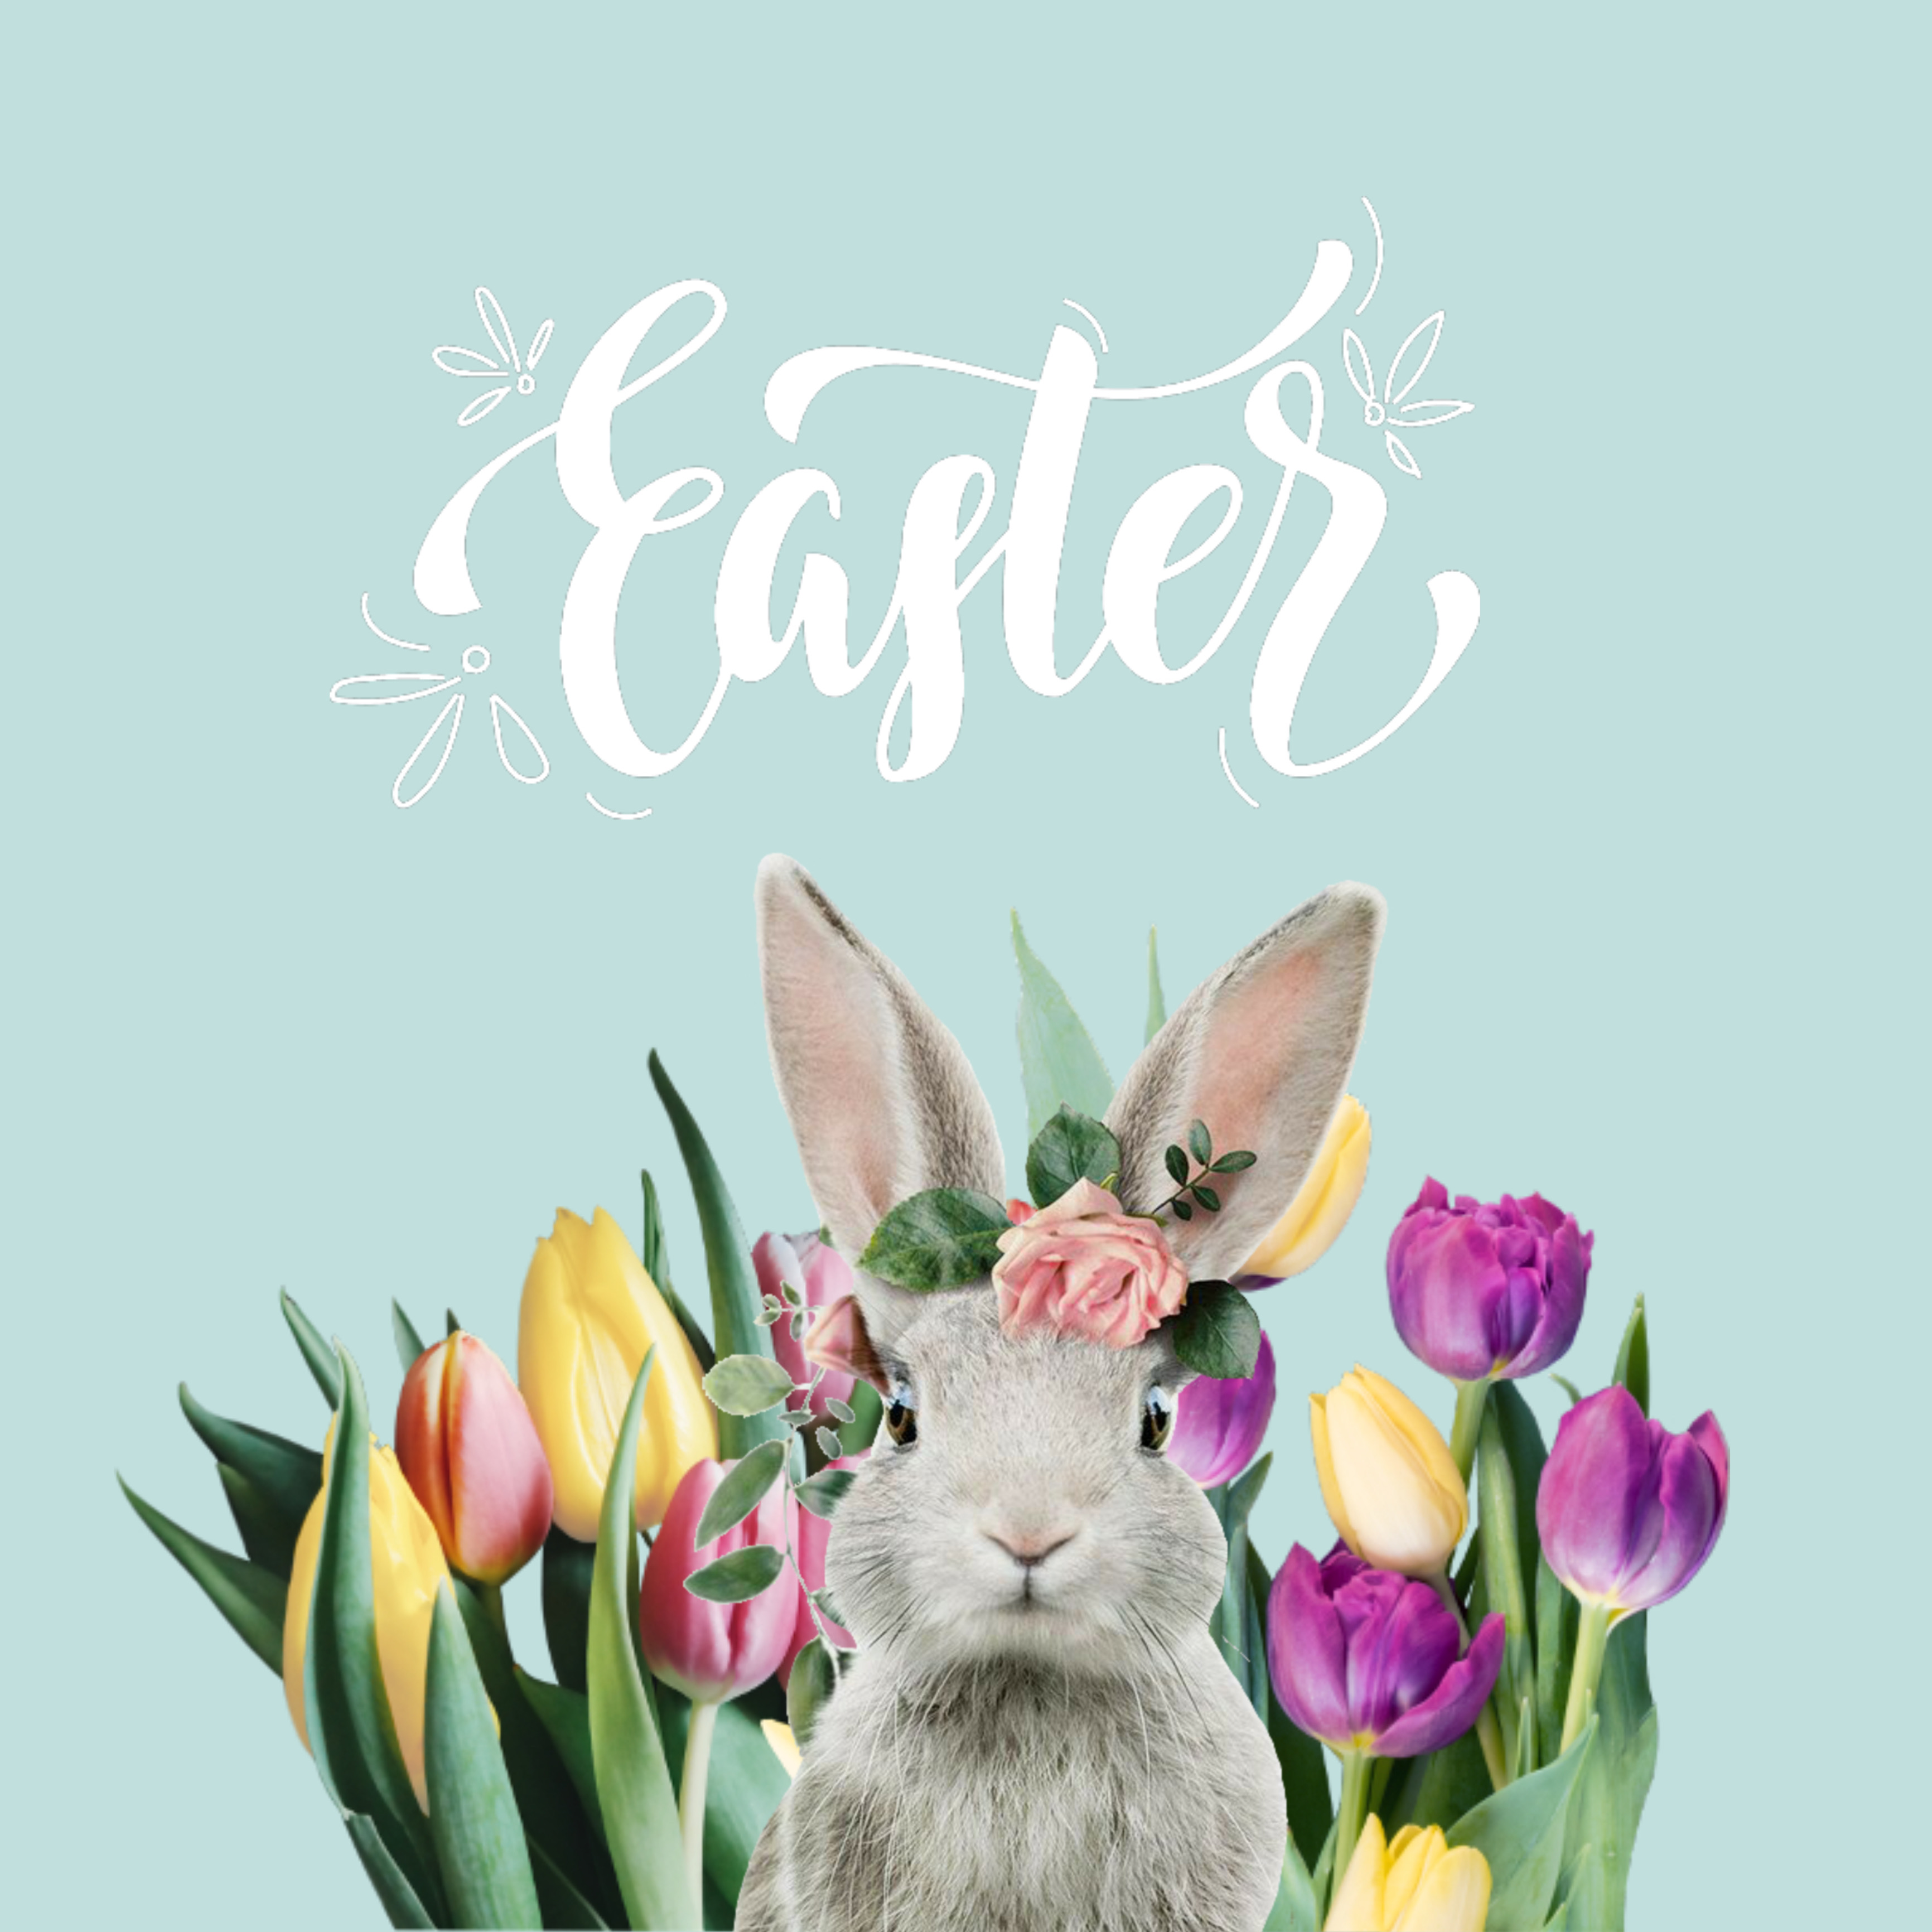 #freetoedit #happyeaster #easter #happyeasterday #easterday #bunny #susilovesphoto #happy 